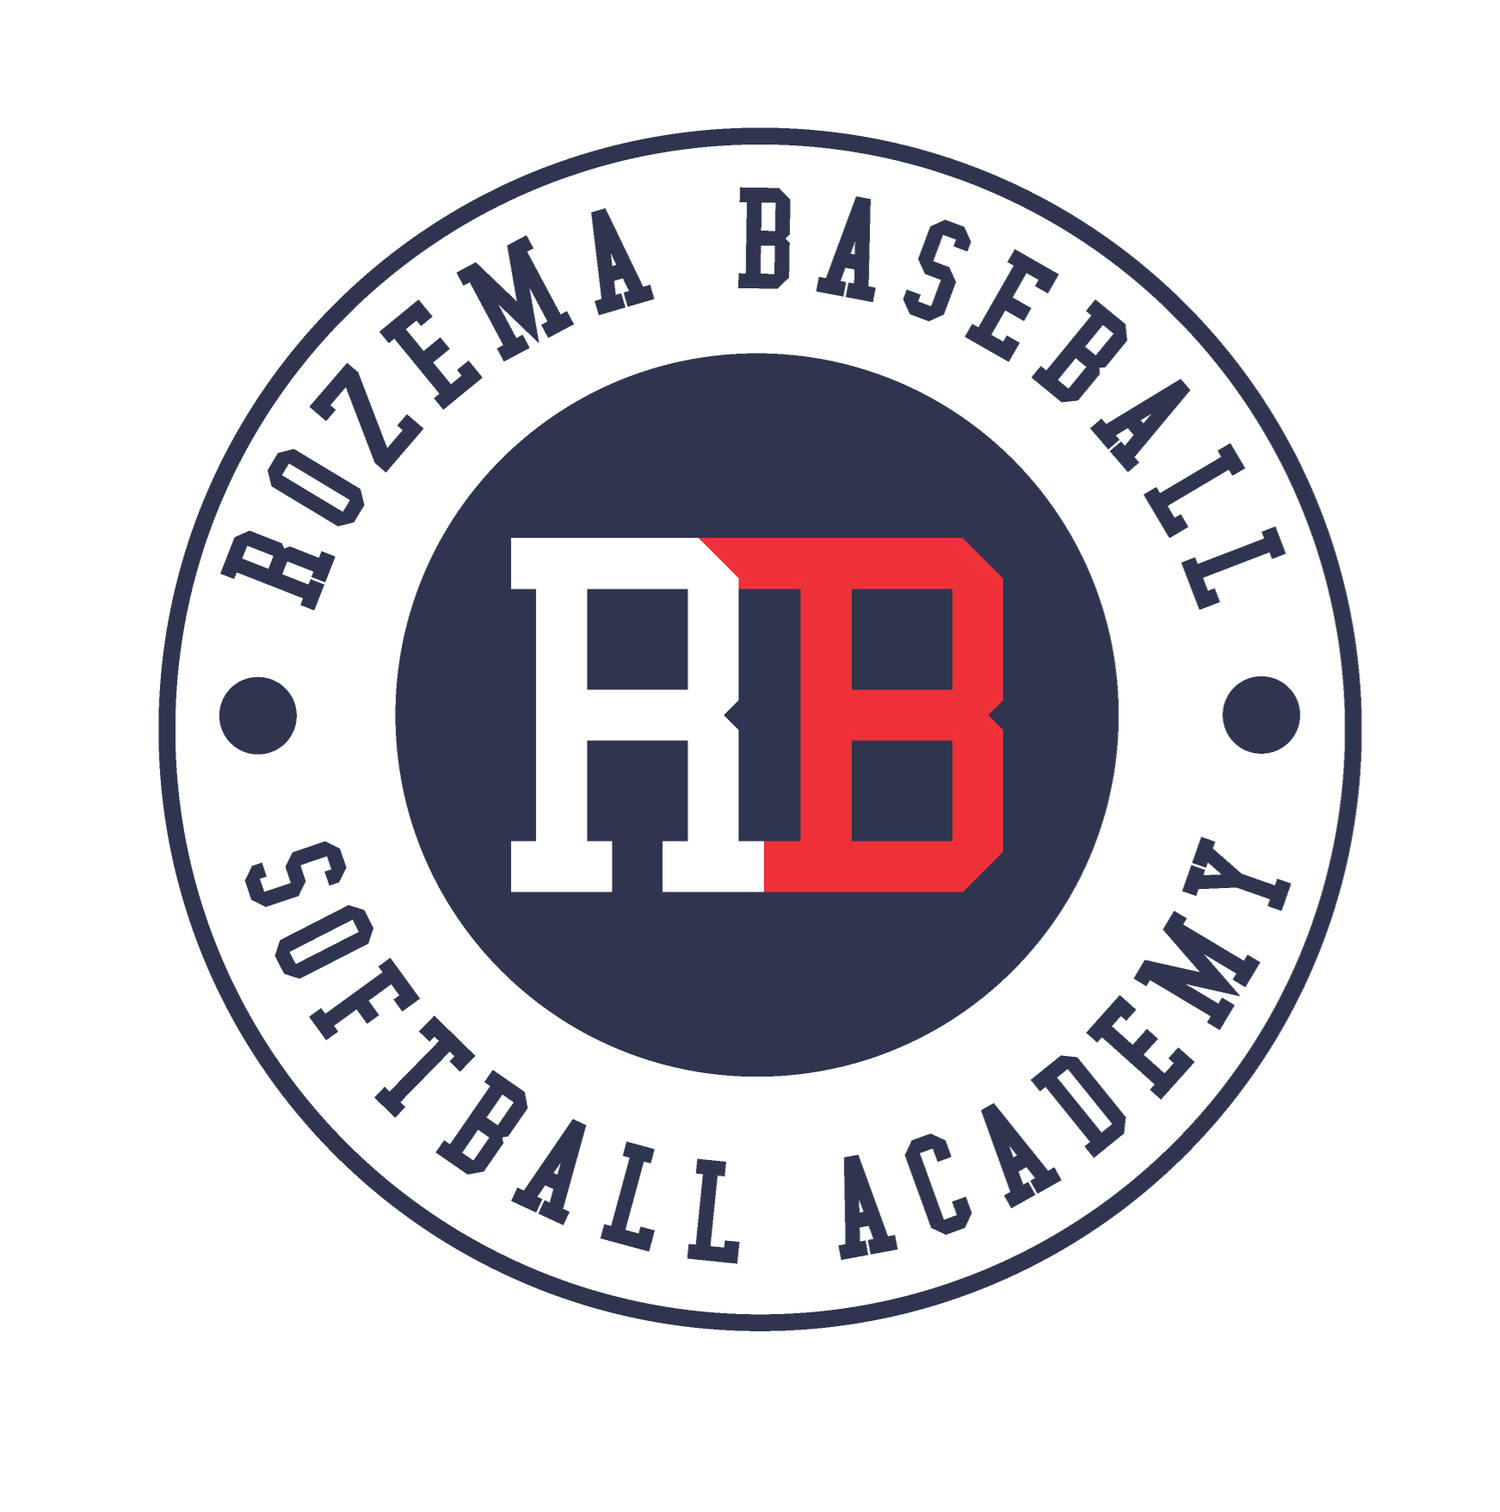 Rozema Baseball & Softball Academy